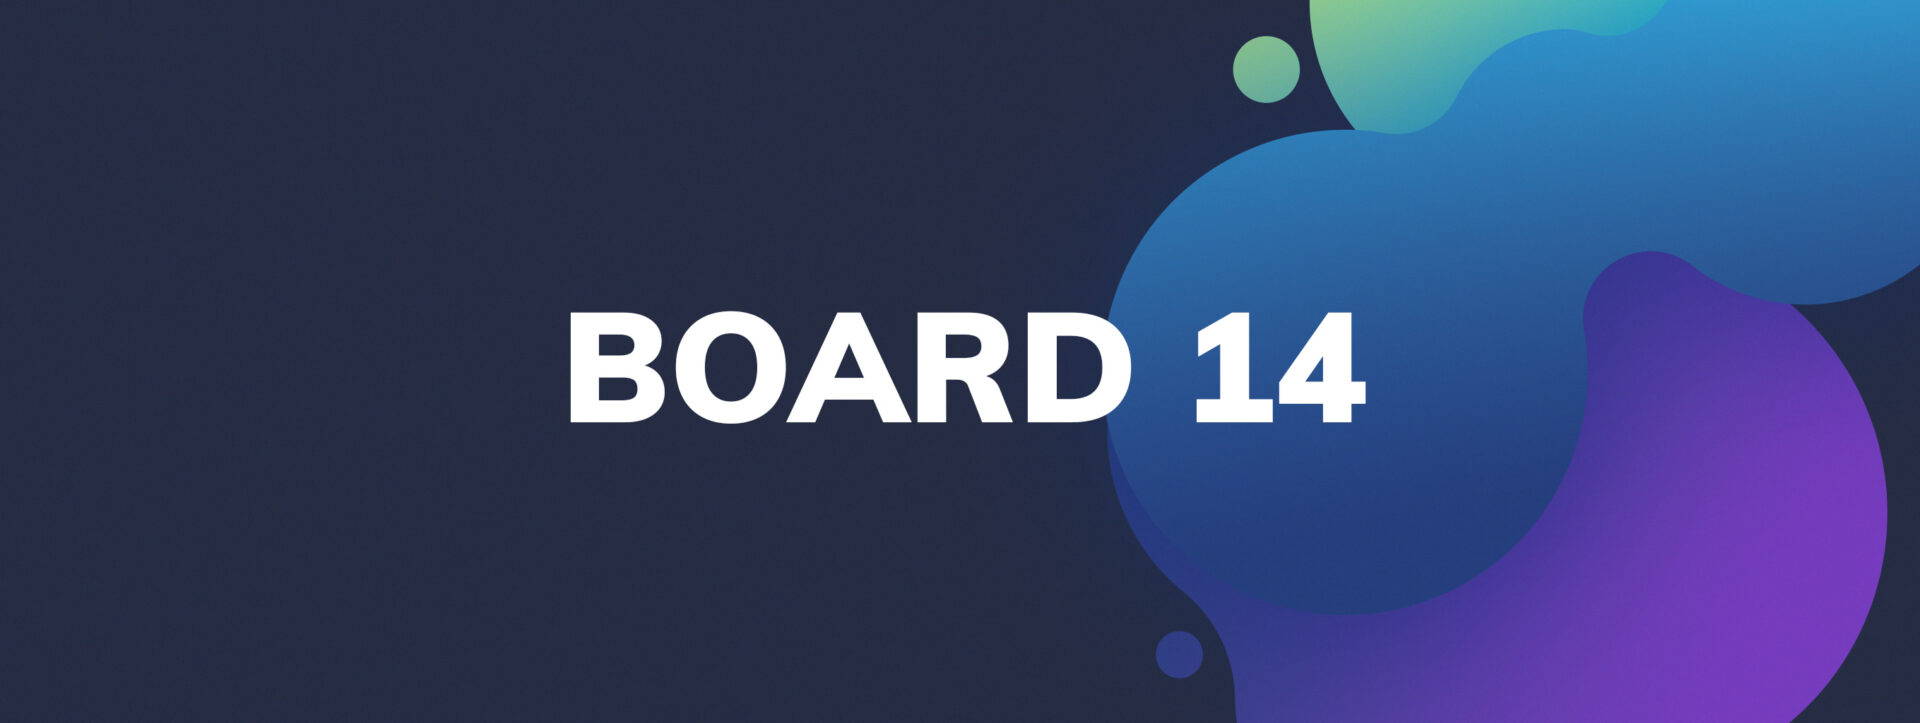 Board 14 next generation planning platform